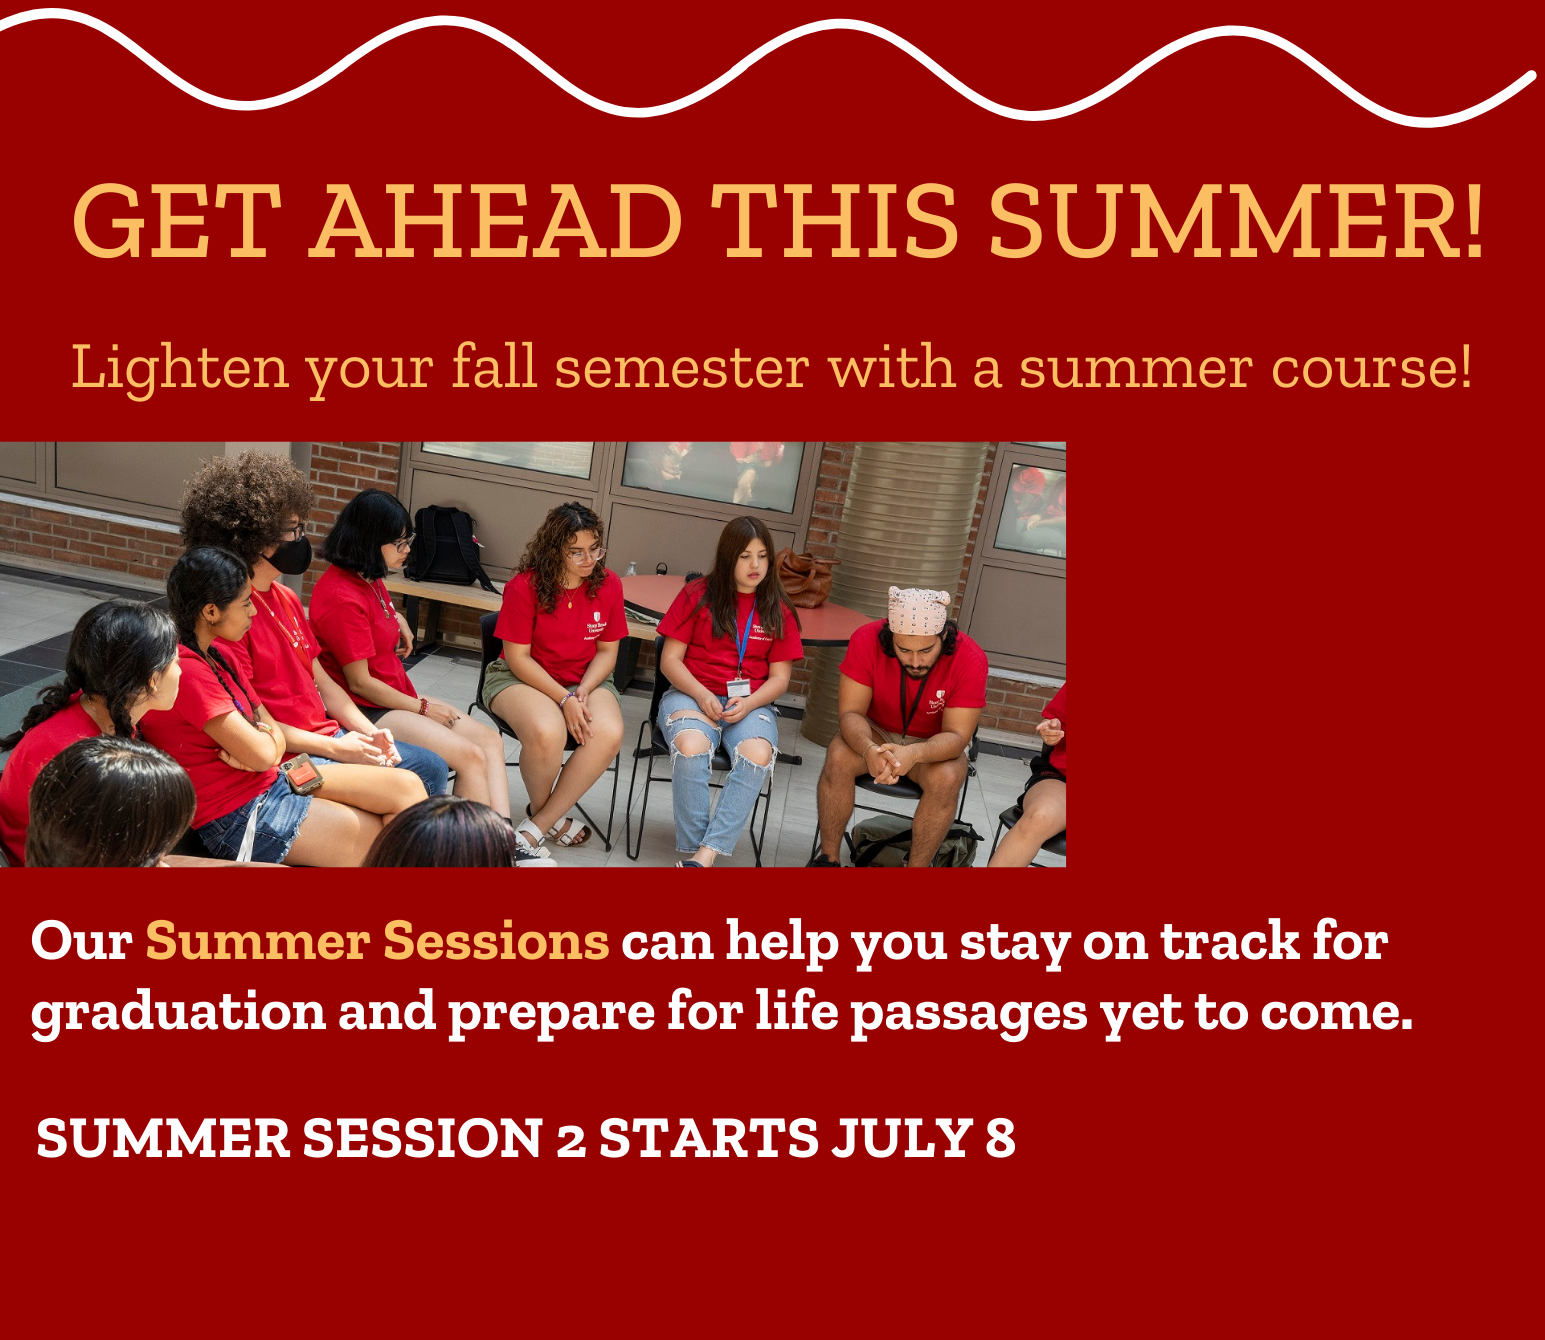 Register now for Summer Session 2!